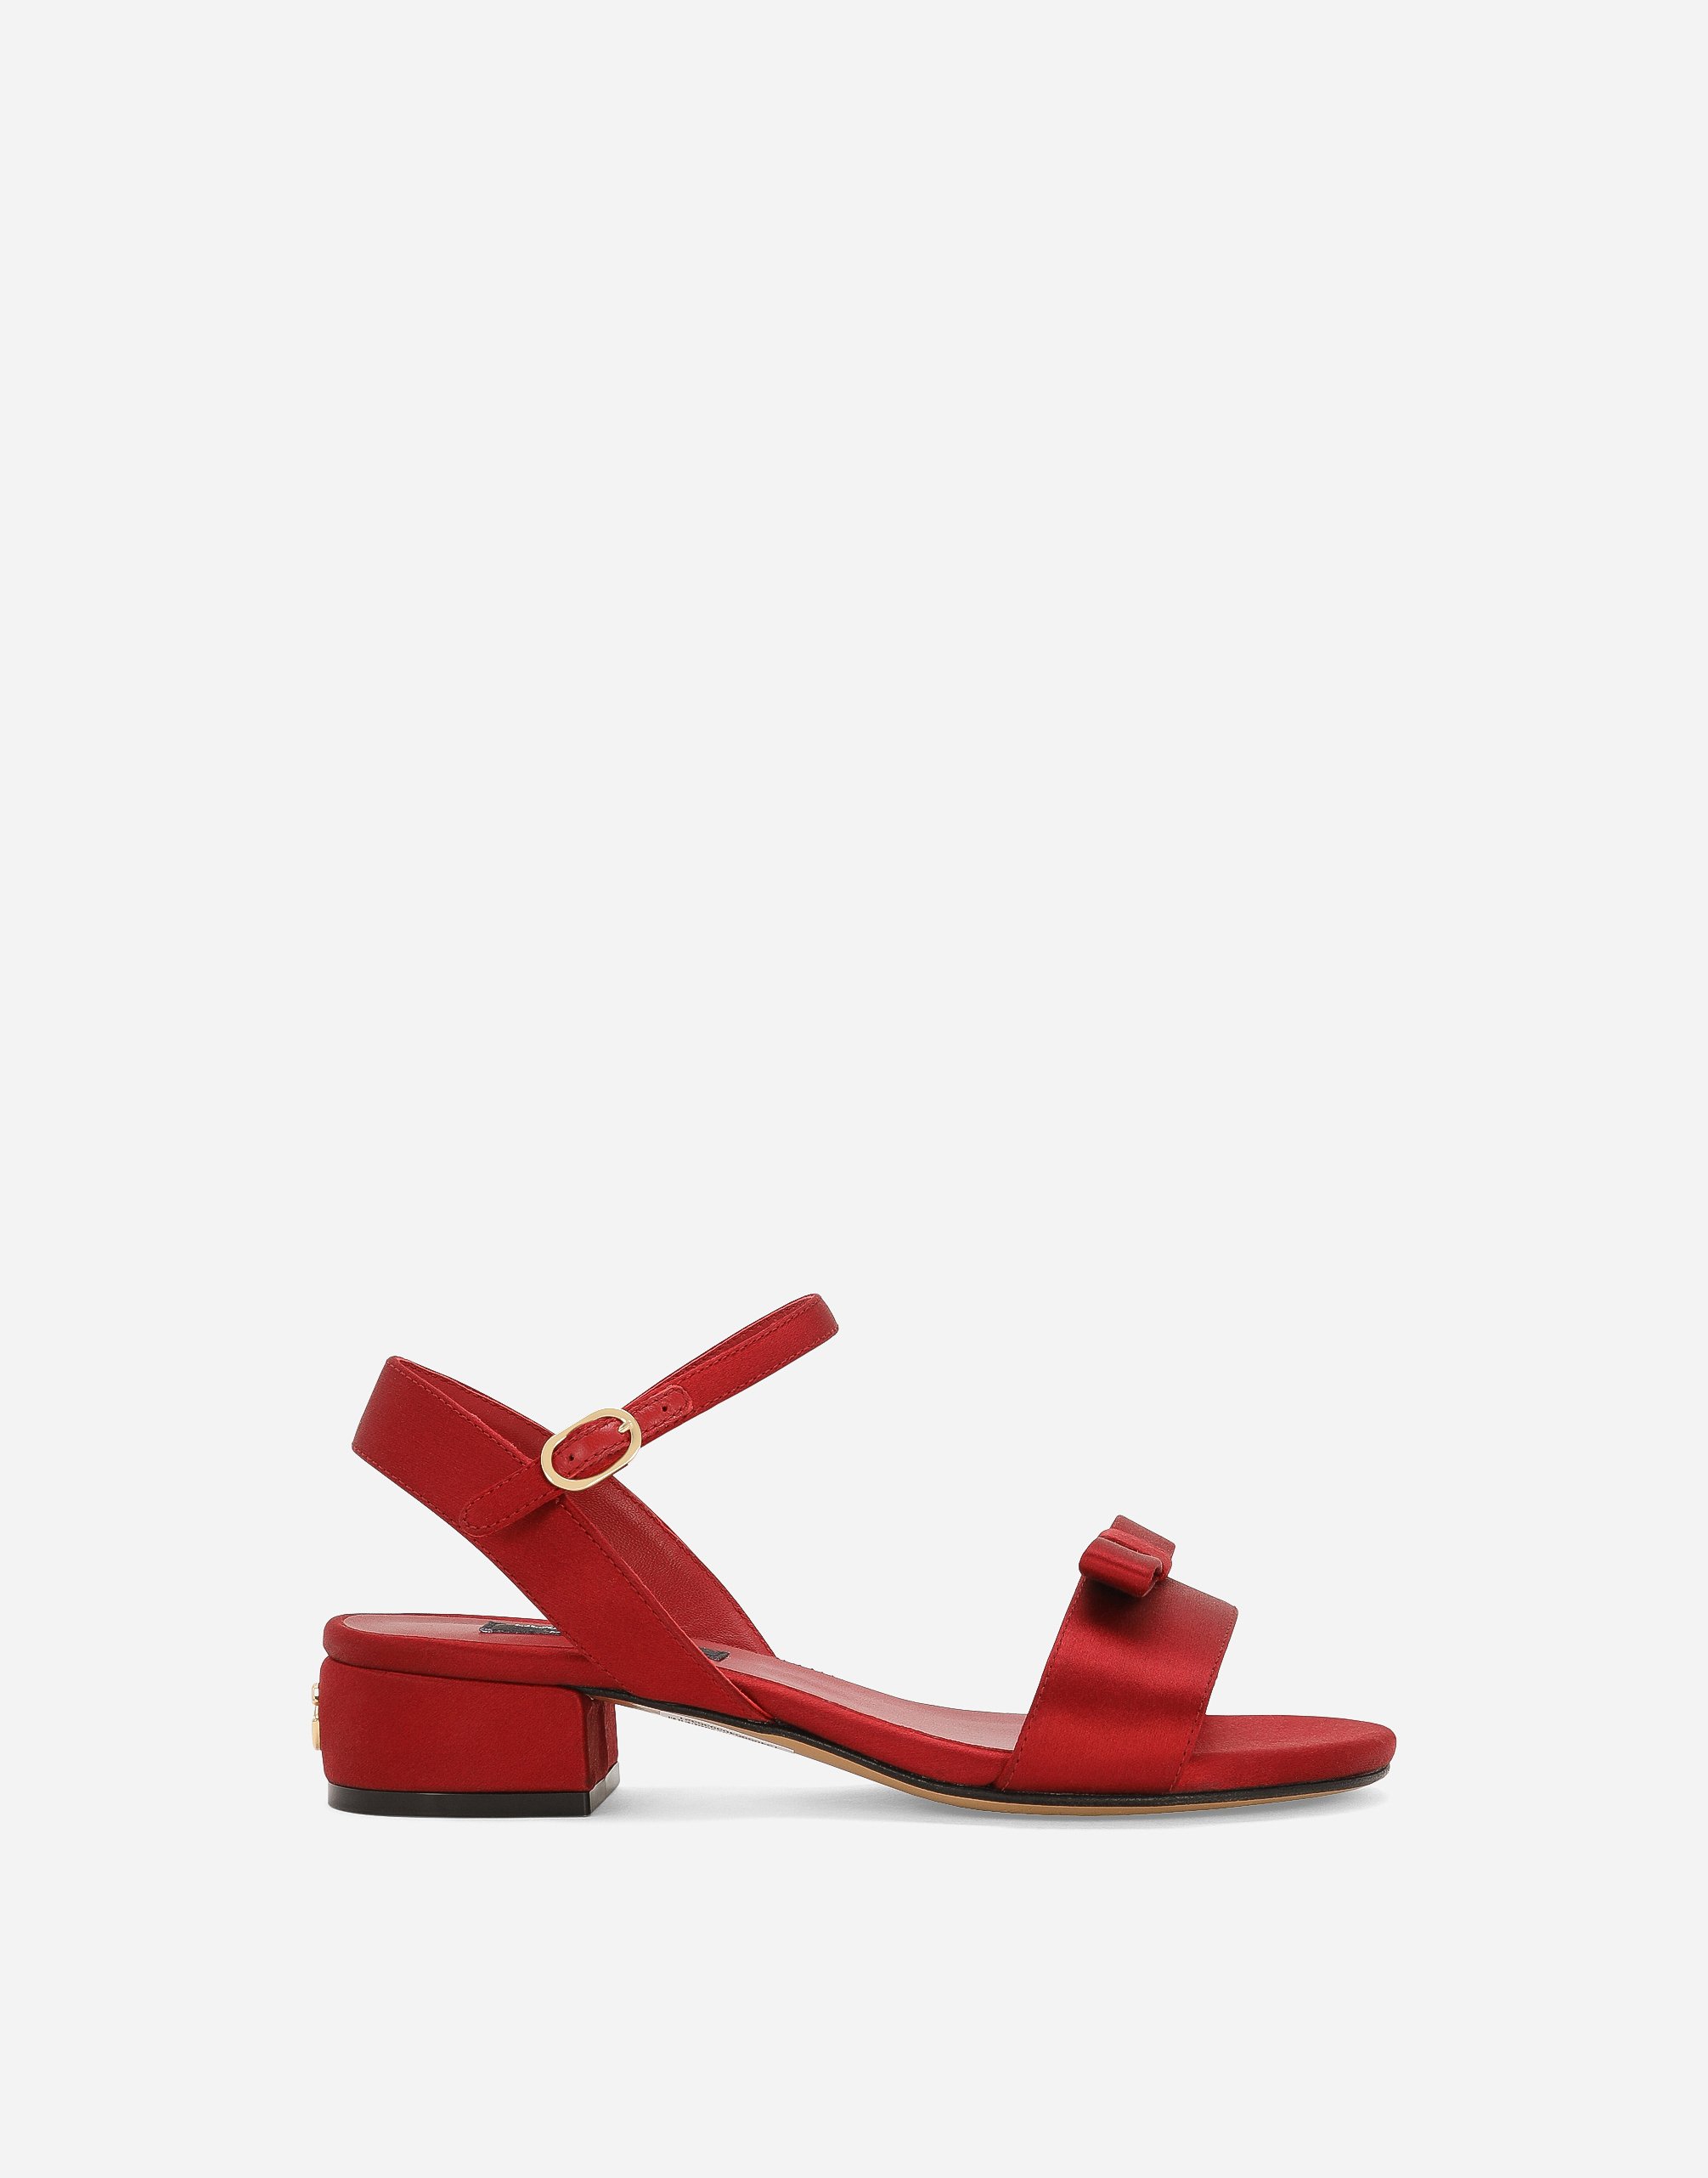 Dolce & Gabbana Satin Sandals In Red